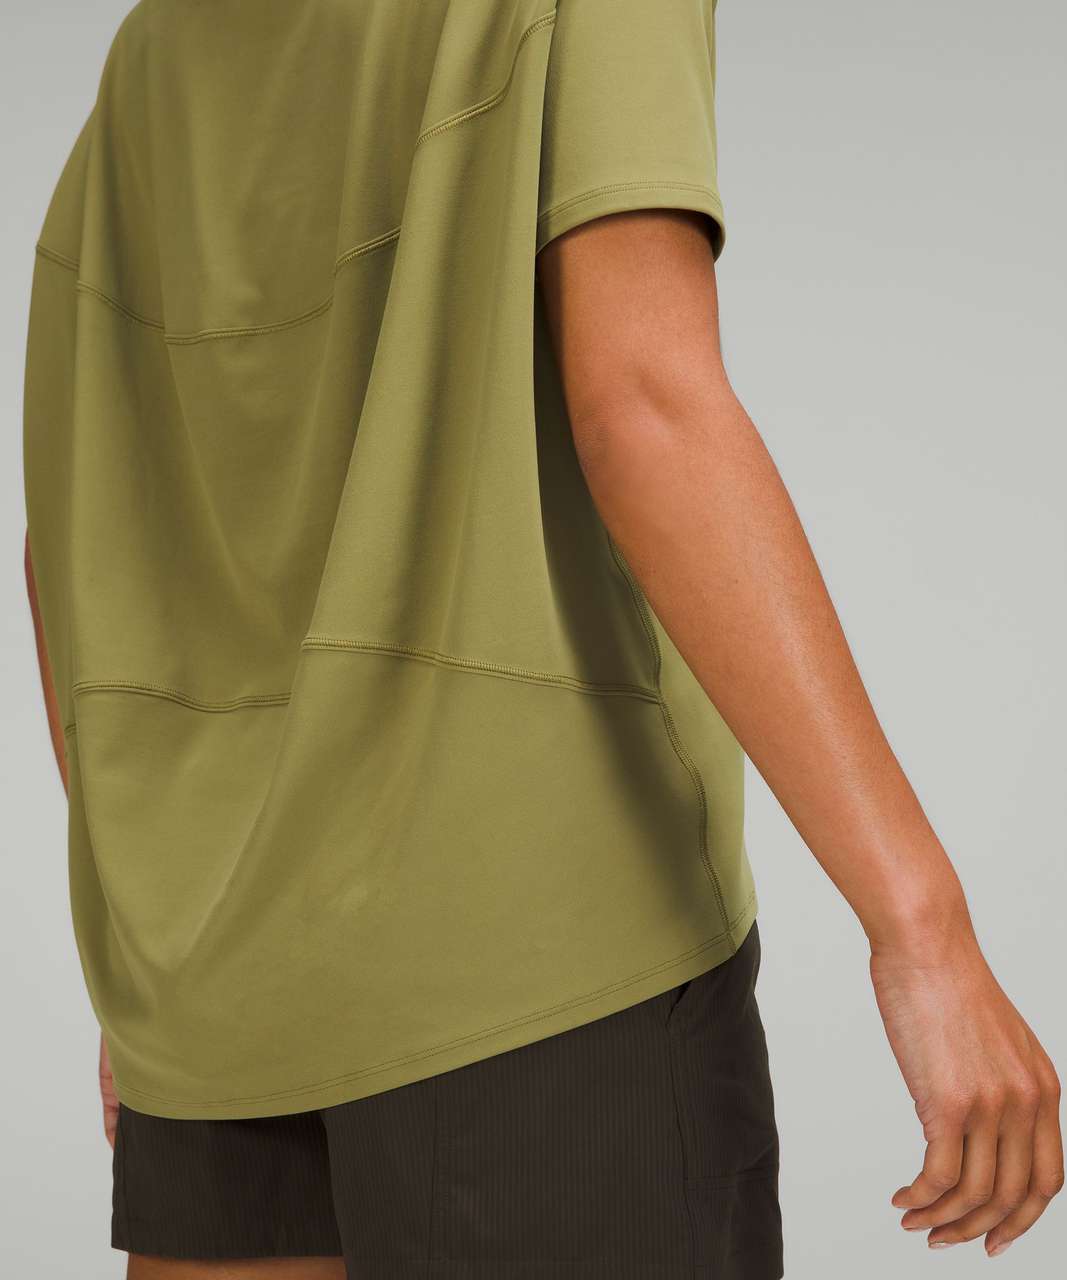 Lululemon Back in Action Short Sleeve T-Shirt *Nulu - Bronze Green